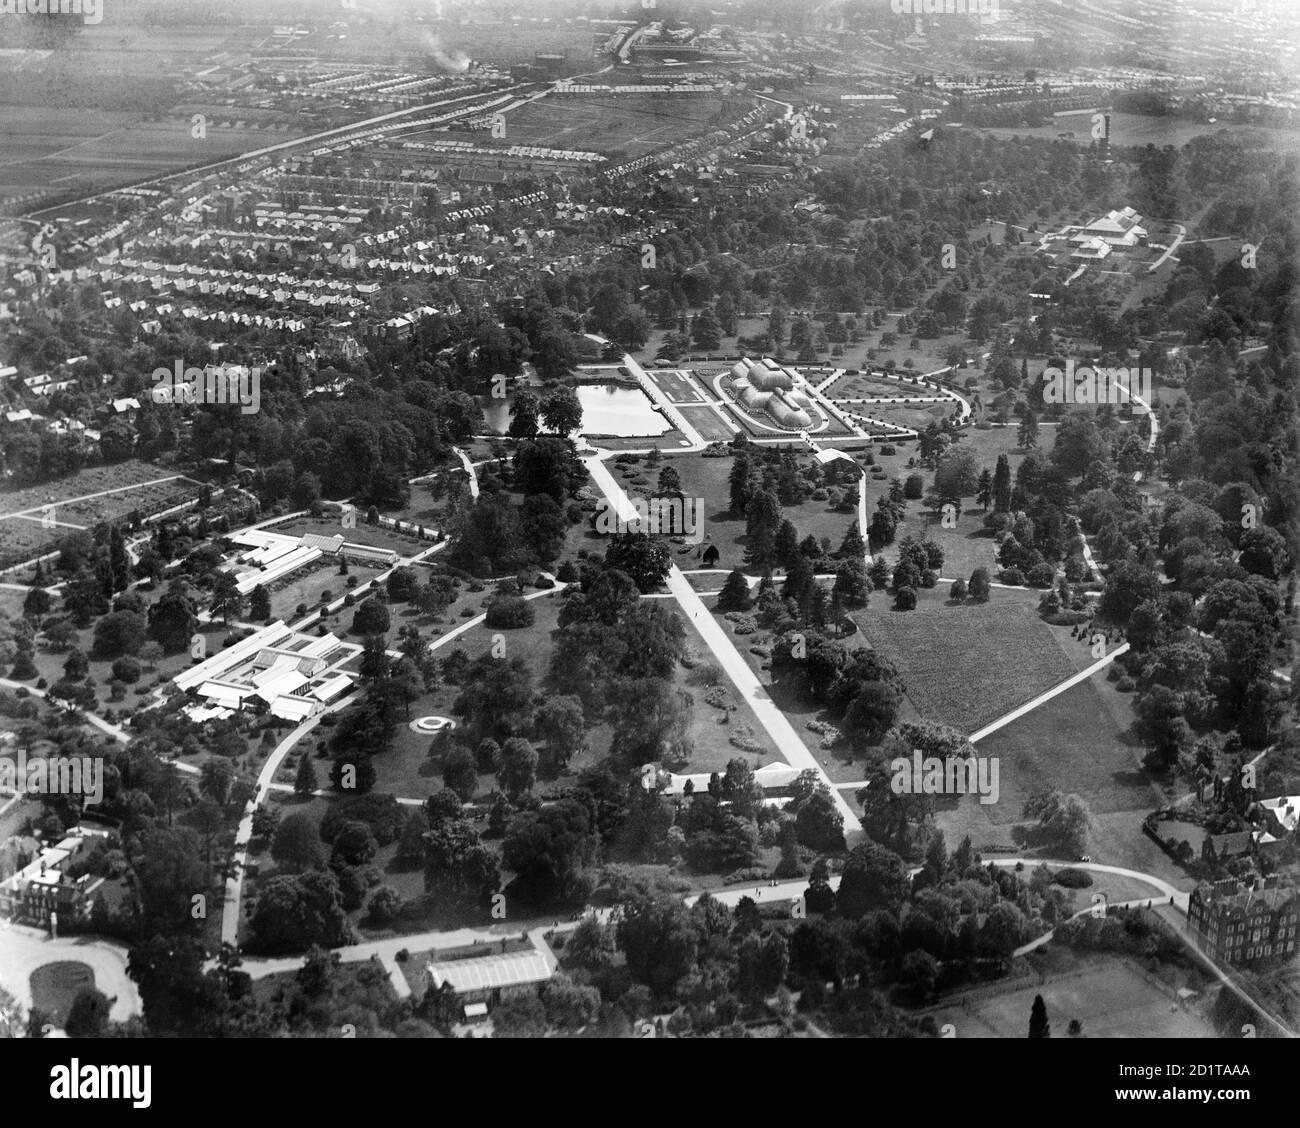 KEW GARDENS, London. Luftaufnahme der Royal Botanic Gardens in Kew, heute UNESCO-Weltkulturerbe. Fotografiert im Jahr 1920. Aerofilms Collection (siehe Links). Stockfoto